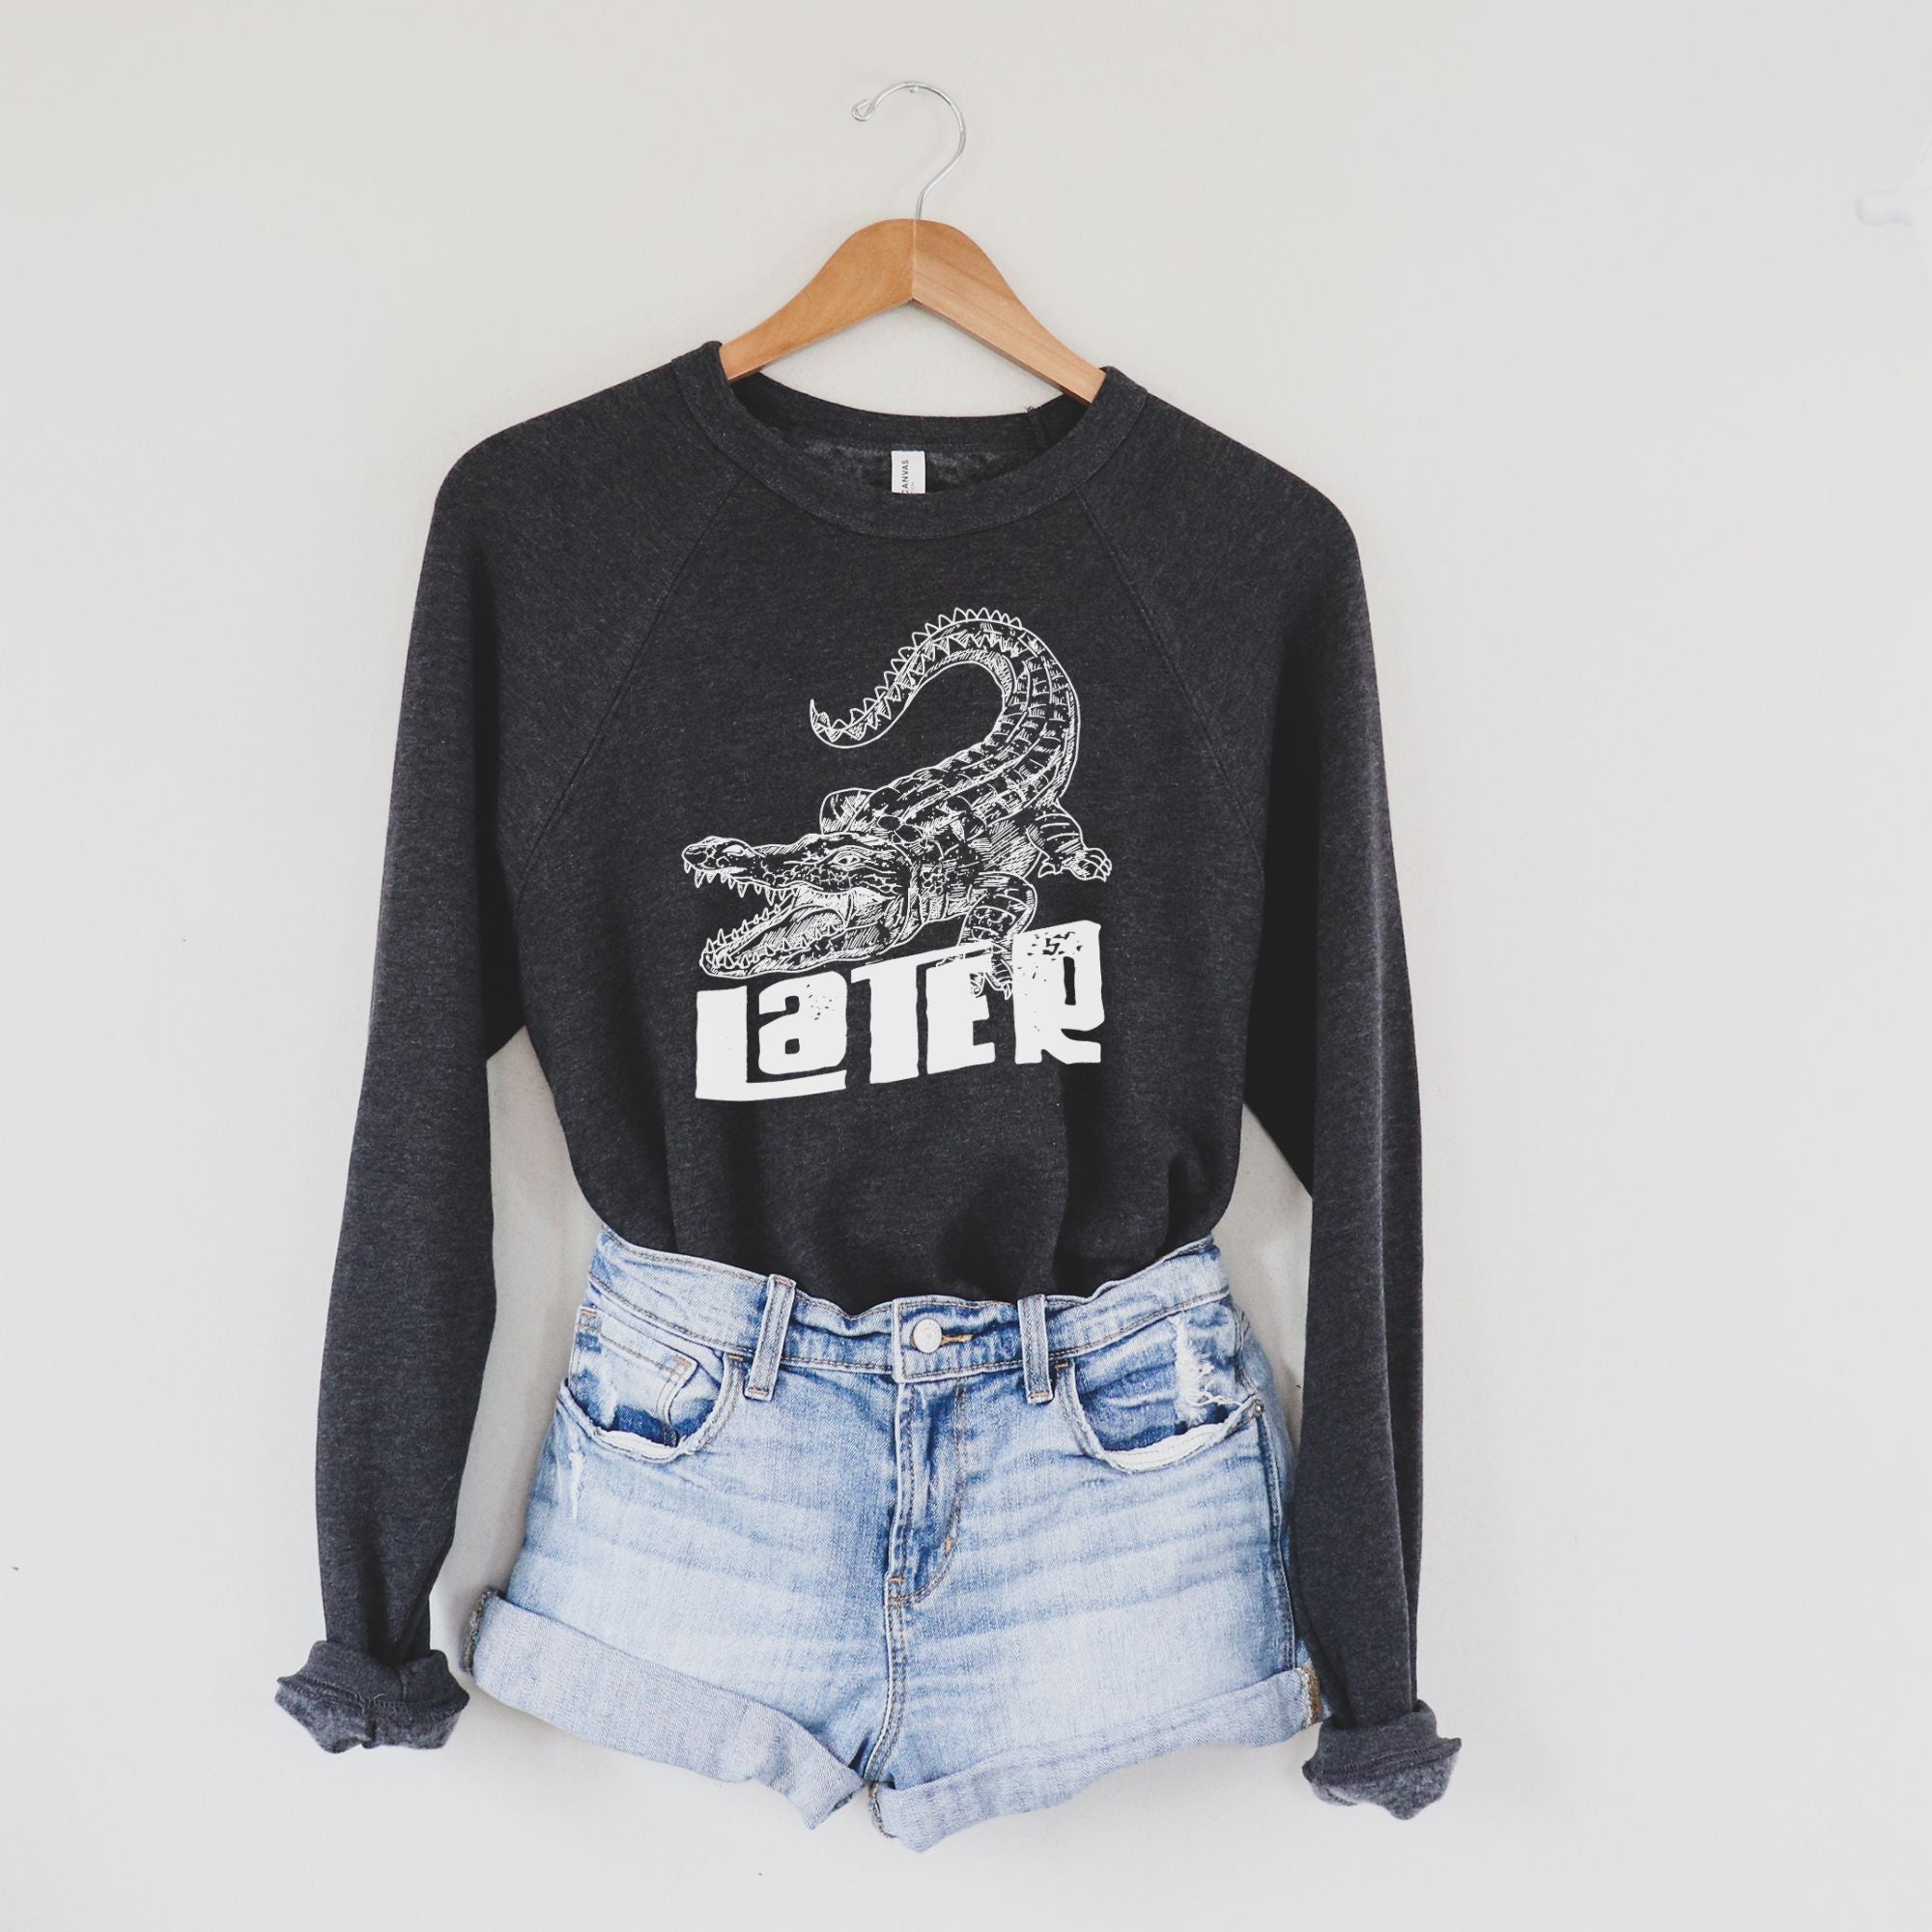 Later Gator Hilarious Bella Canvas Sweatshirt or Hoodie *Unisex Fit*-Sweatshirts-208 Tees Wholesale, Idaho